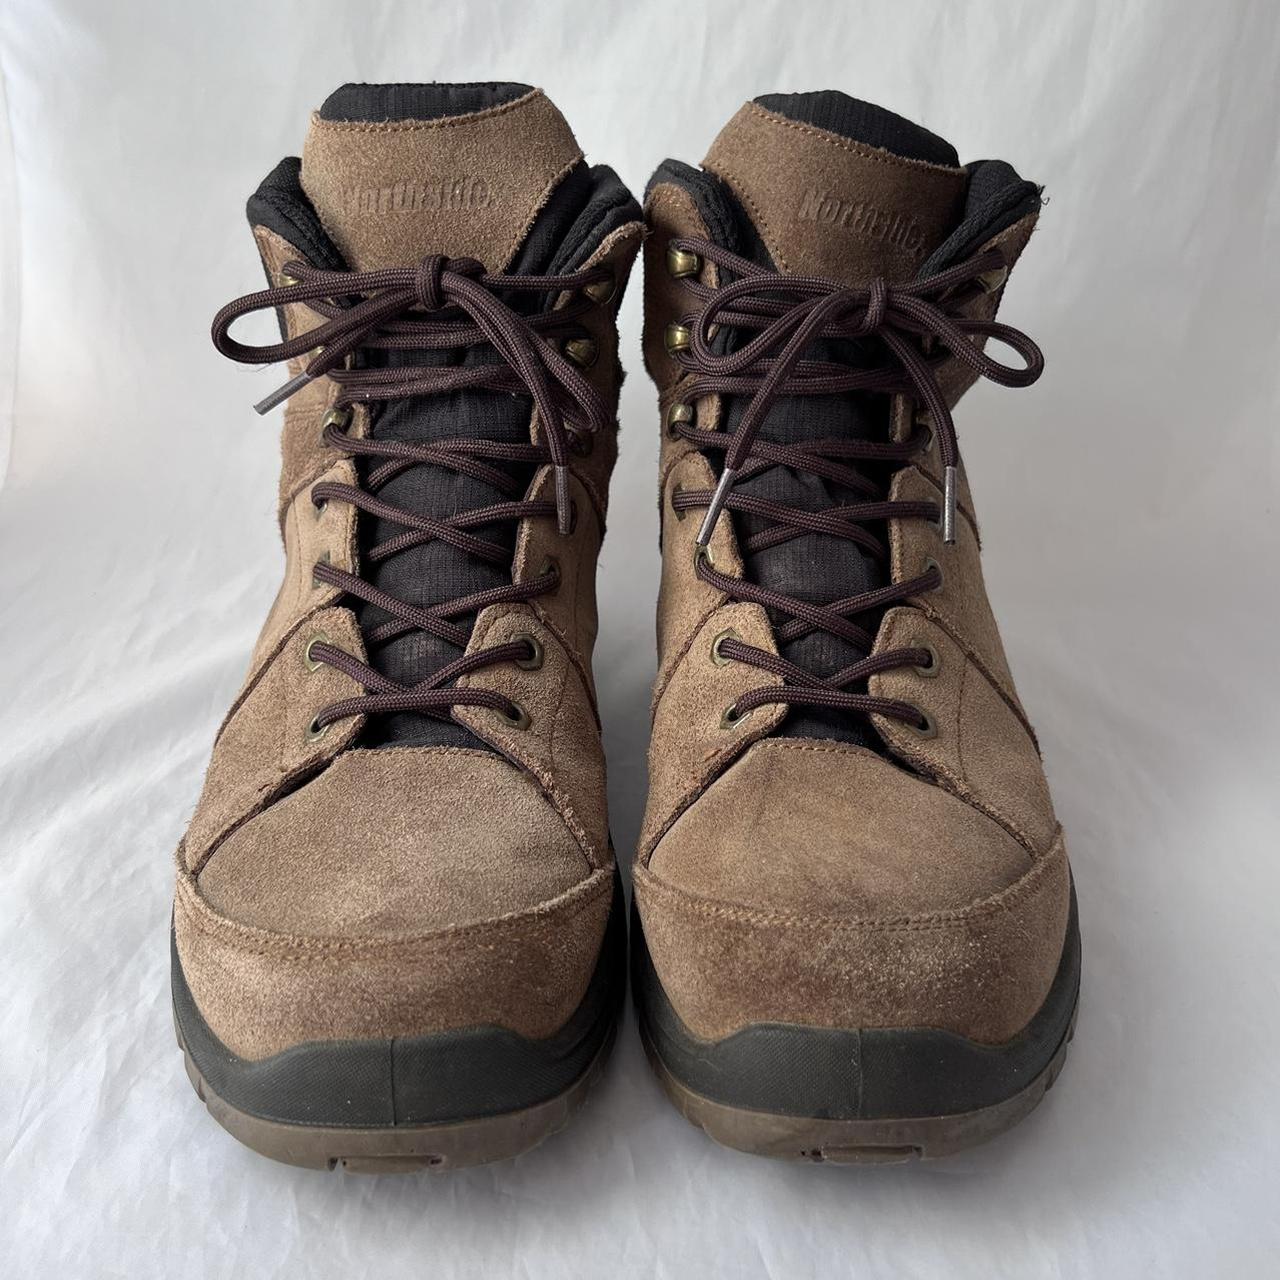 Men’s Northside Leather Hiking/Work Boots -Faux... - Depop